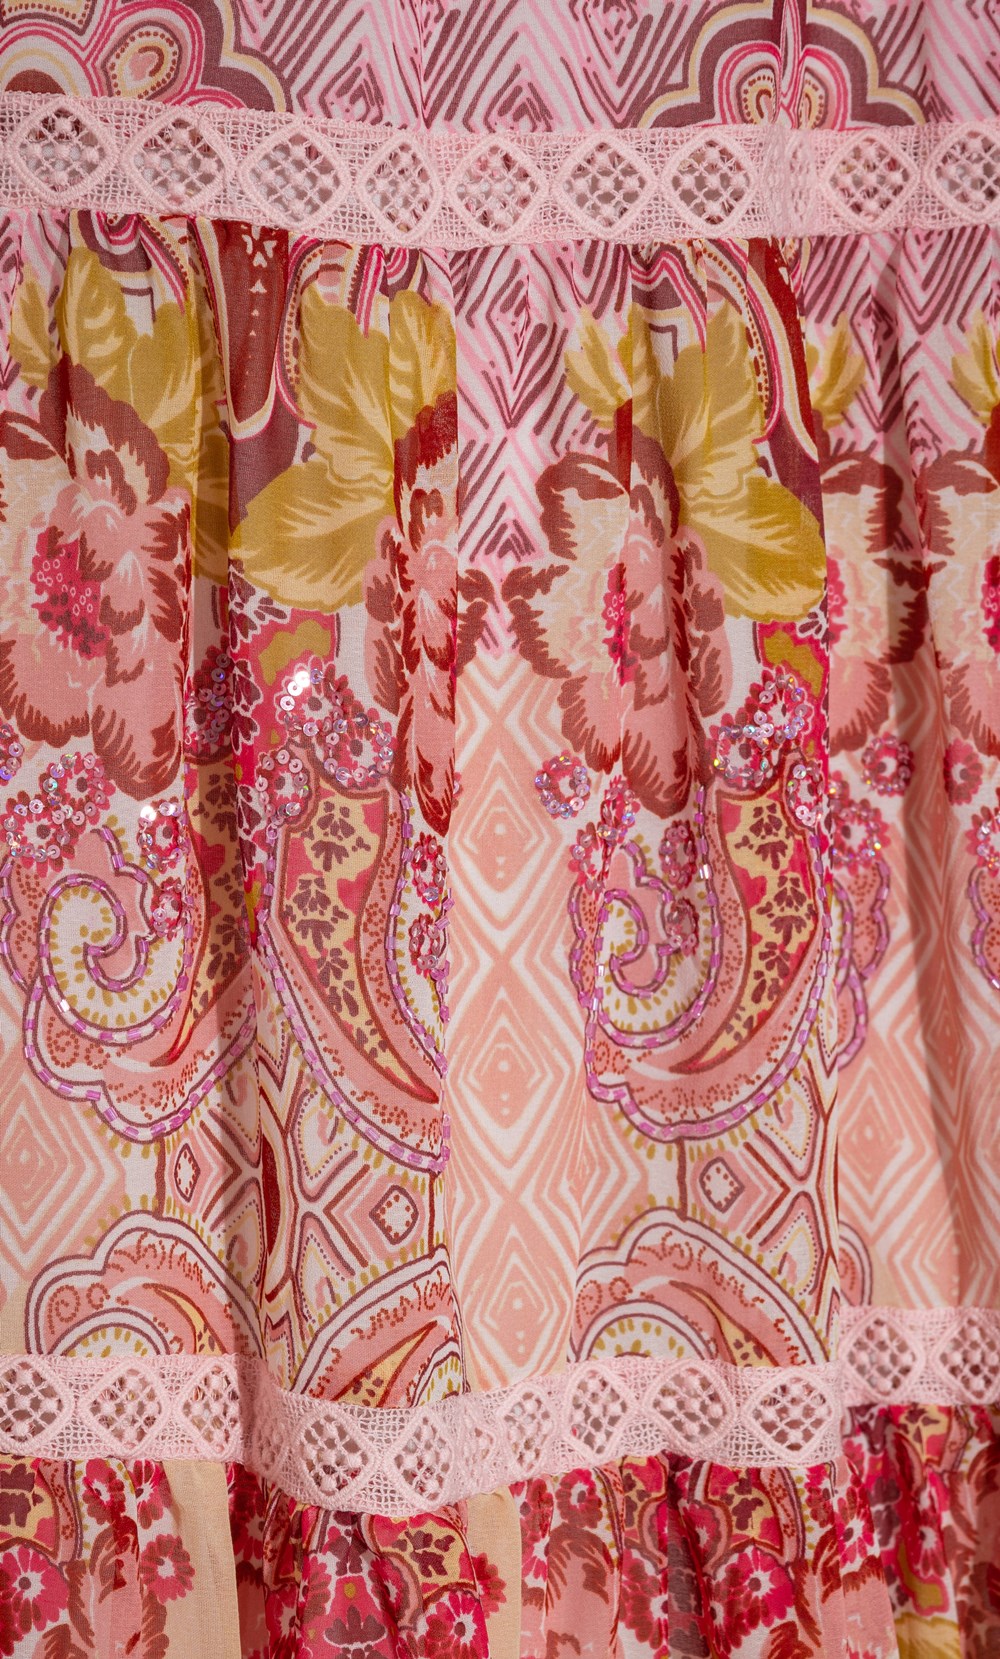 Embellished Printed Smocked Midaxi Dress